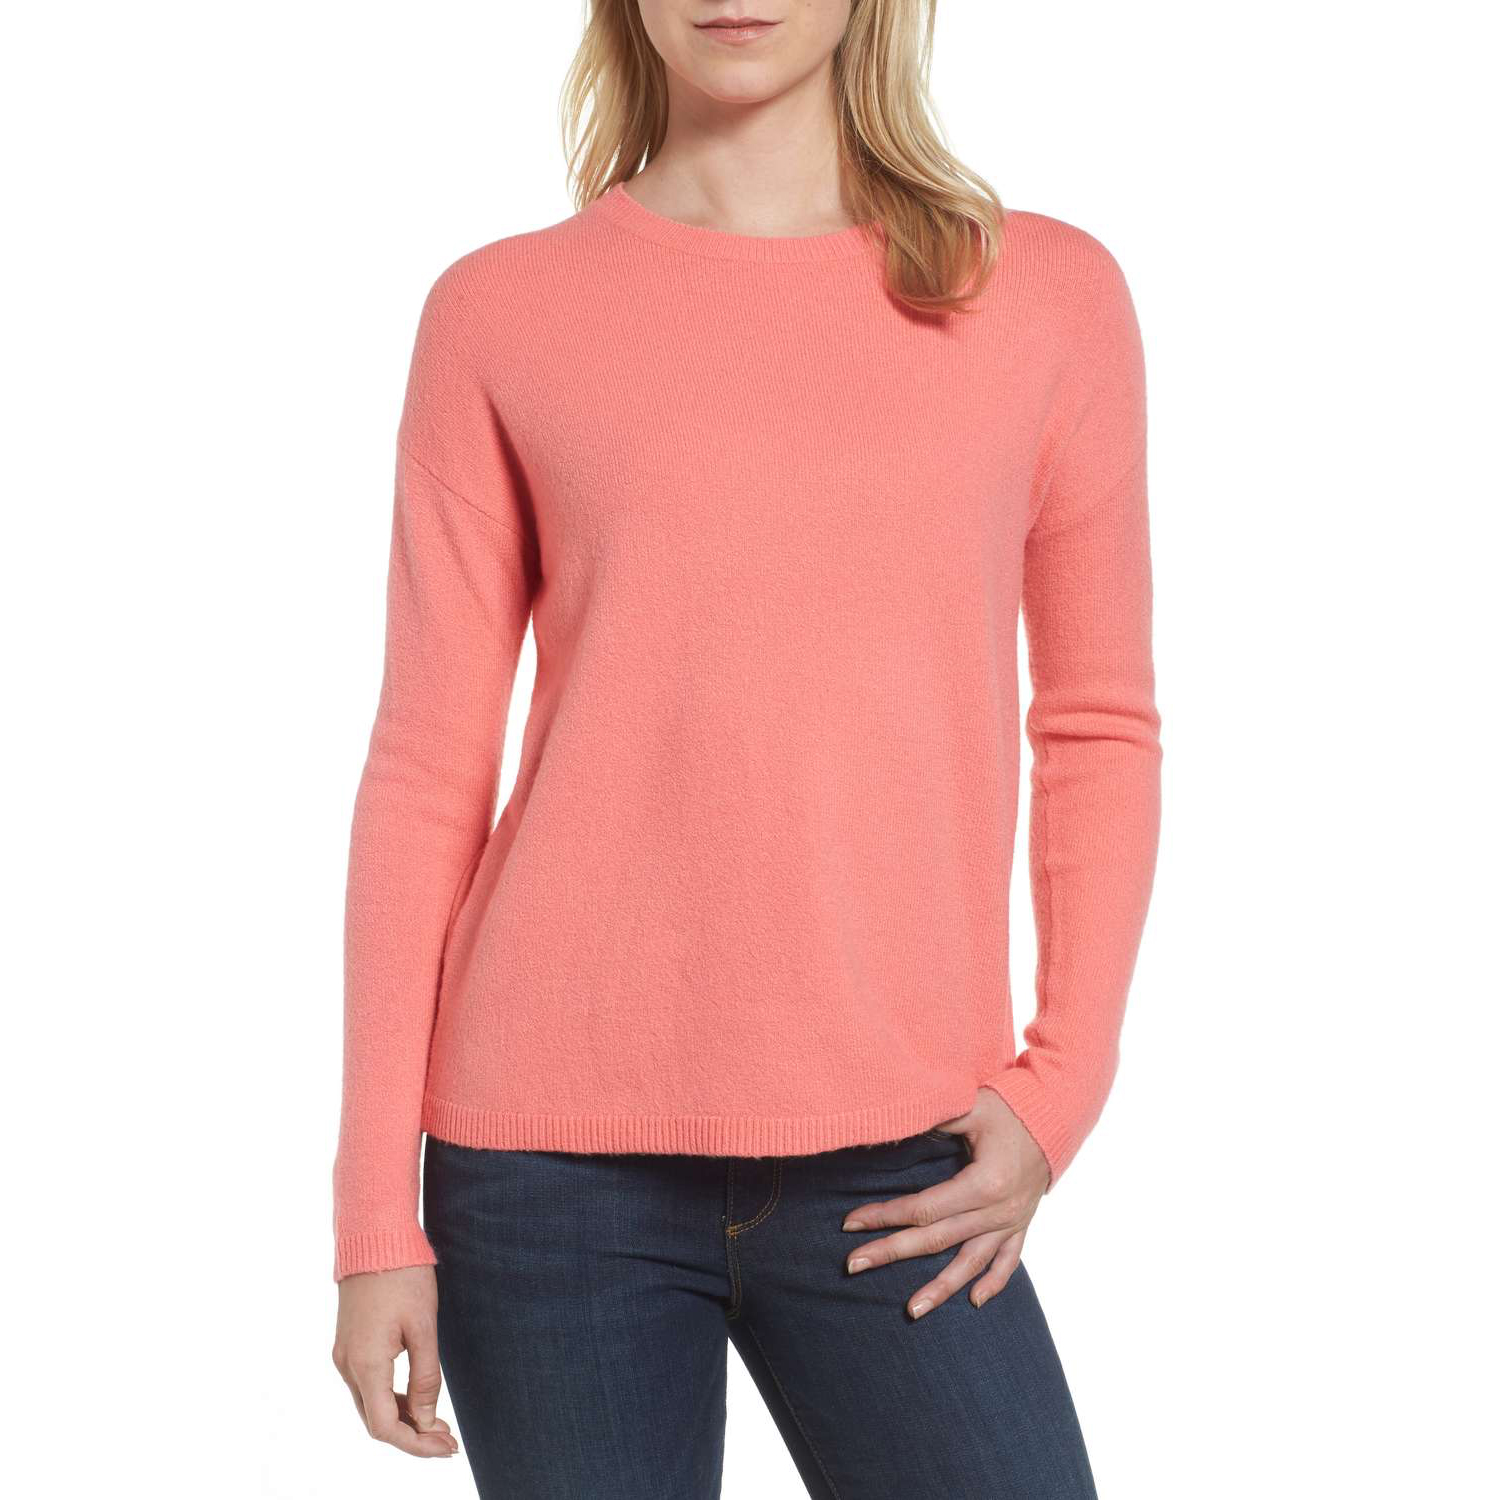 pinksweater2.jpg